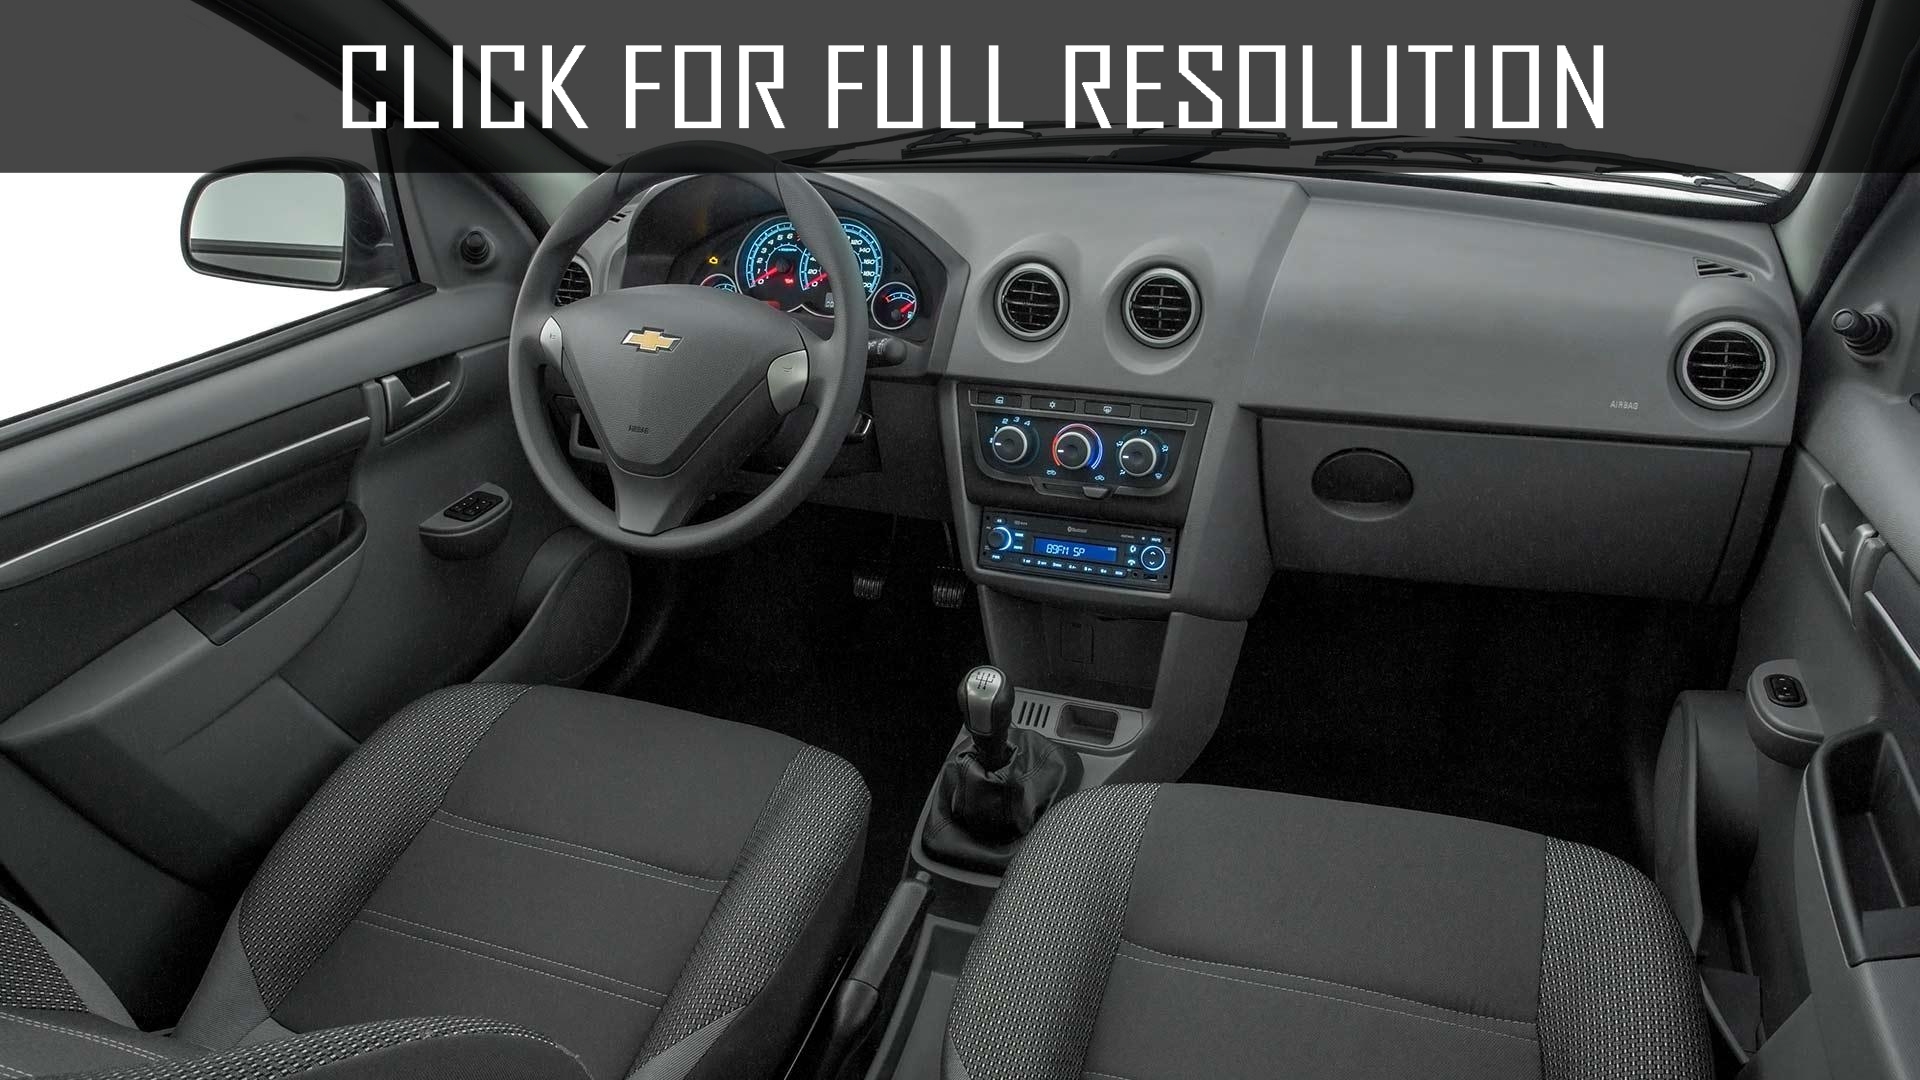 Chevrolet Celta 2015